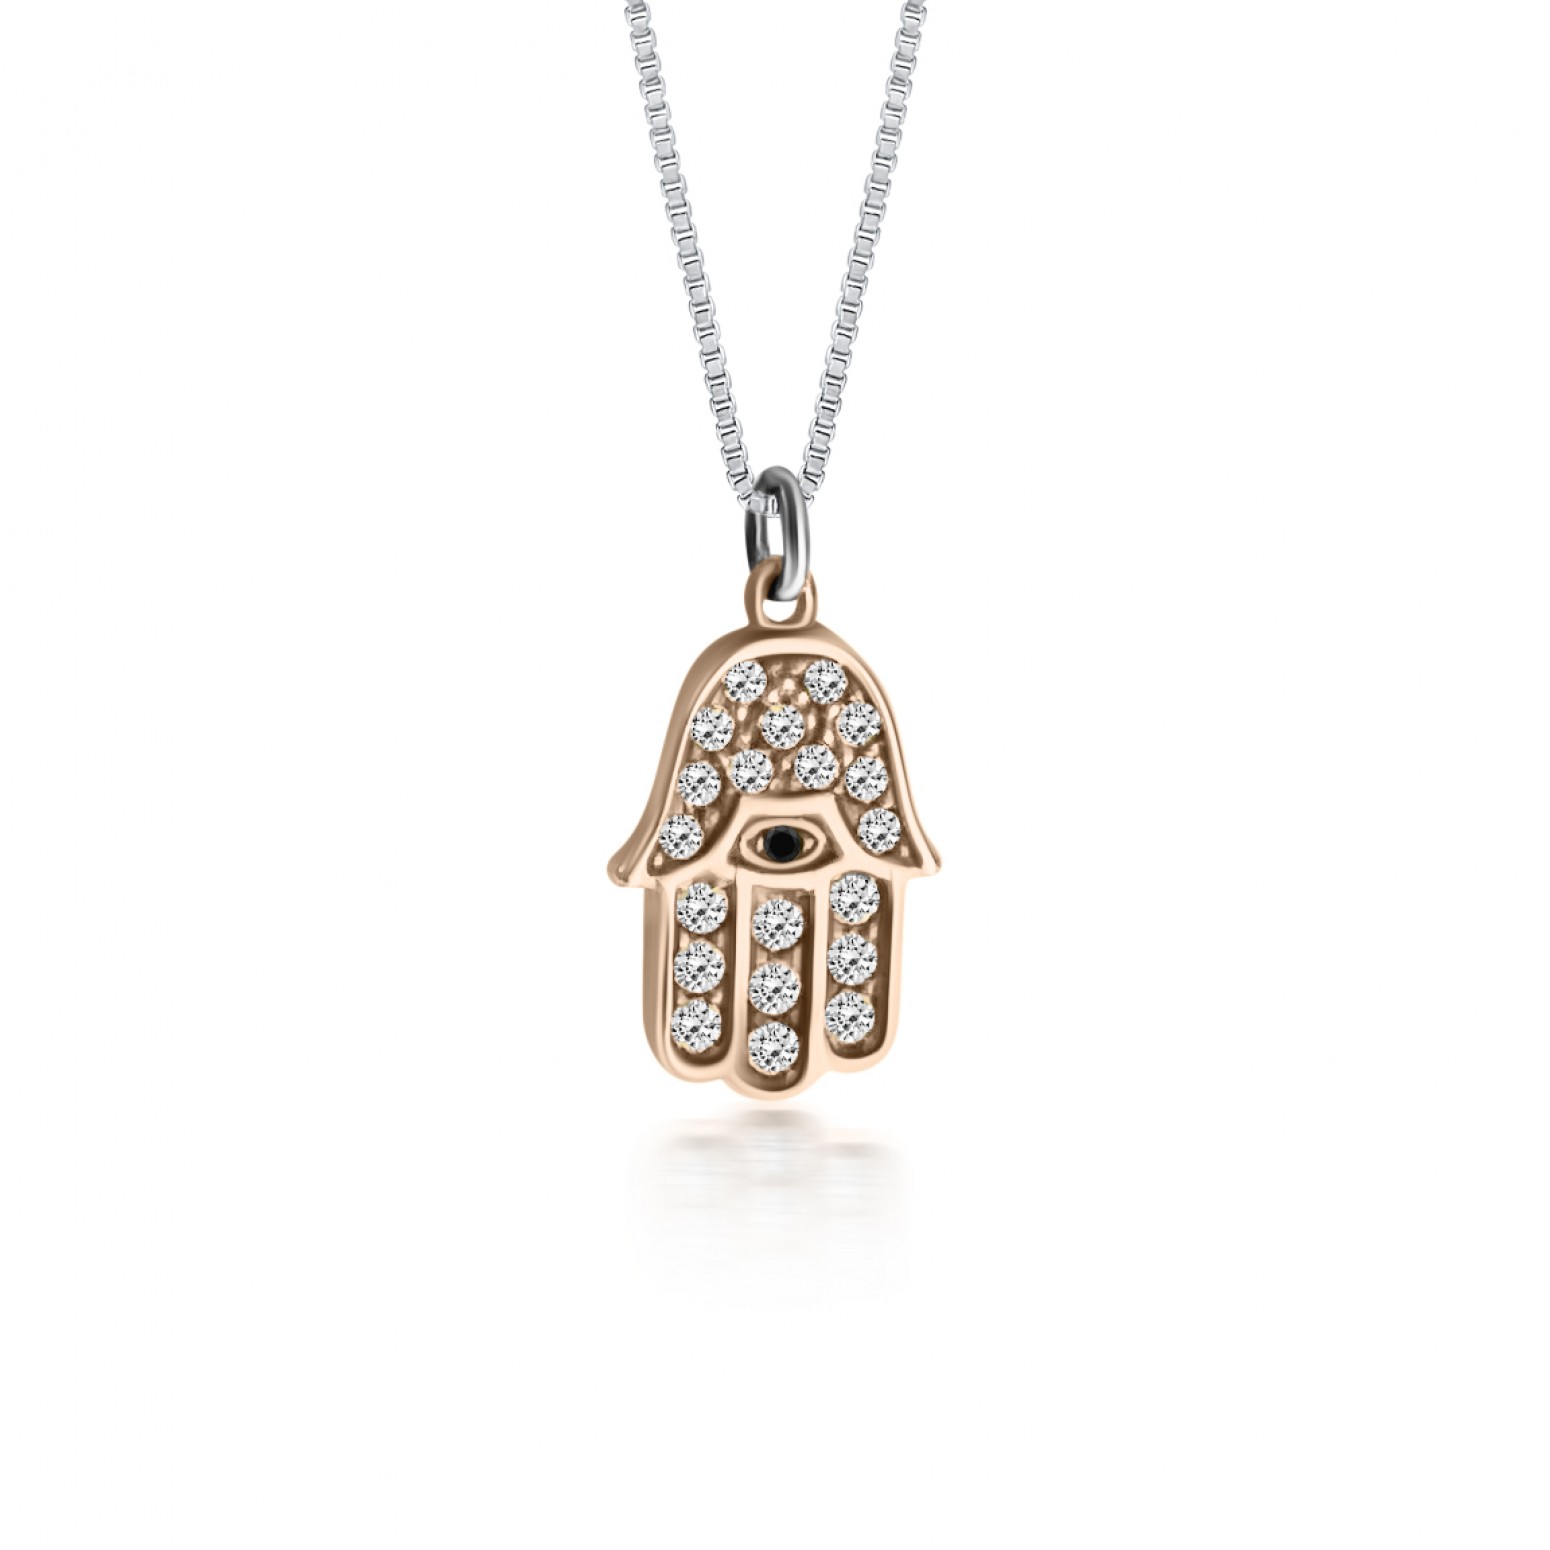 Hamsa hand necklace, Κ14 pink gold with zircon, ko2307 NECKLACES Κοσμηματα - chrilia.gr